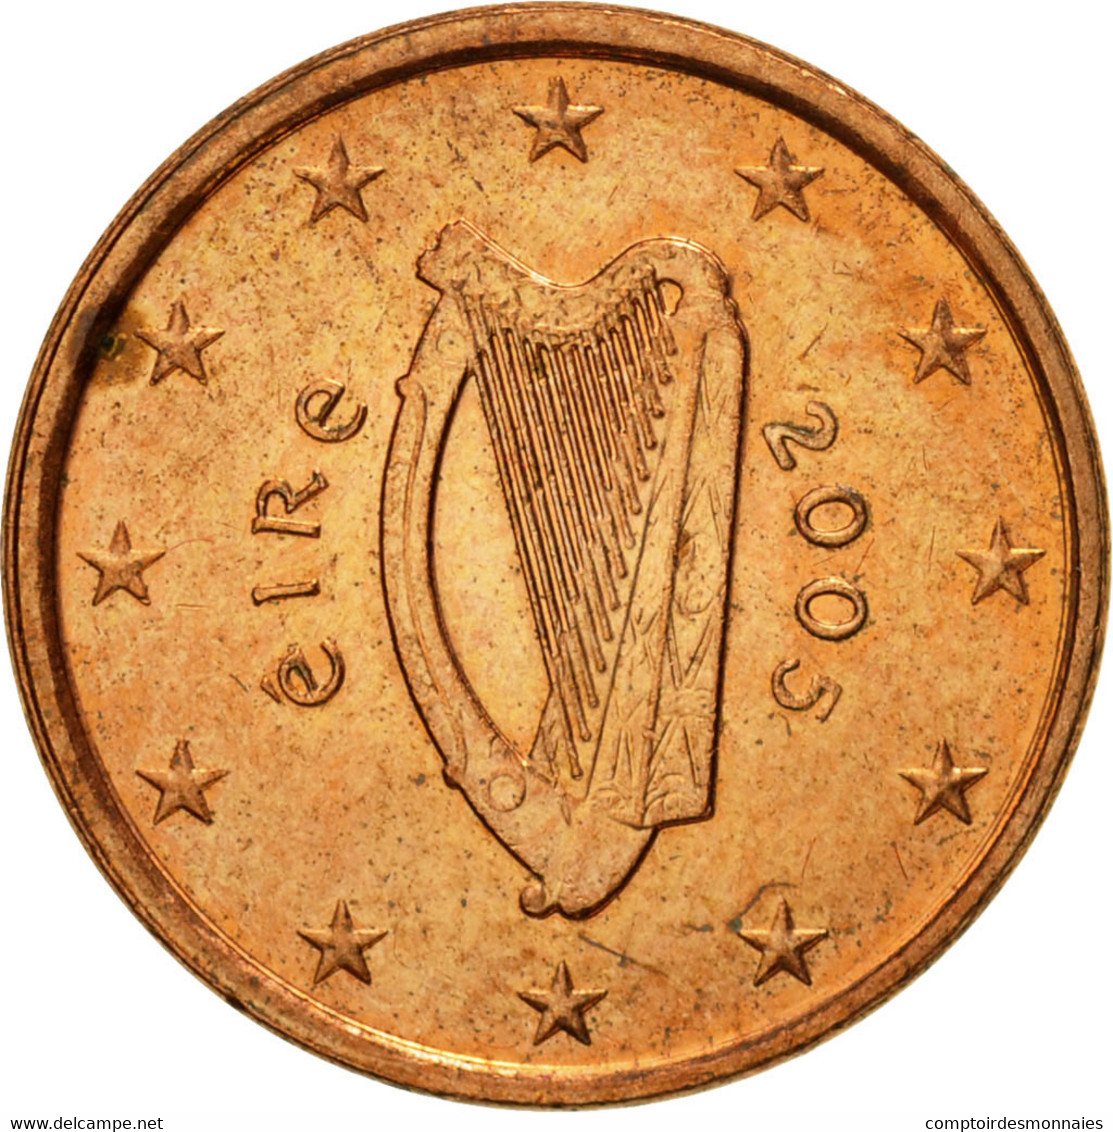 IRELAND REPUBLIC, Euro Cent, 2005, TTB, Copper Plated Steel, KM:32 - Irland